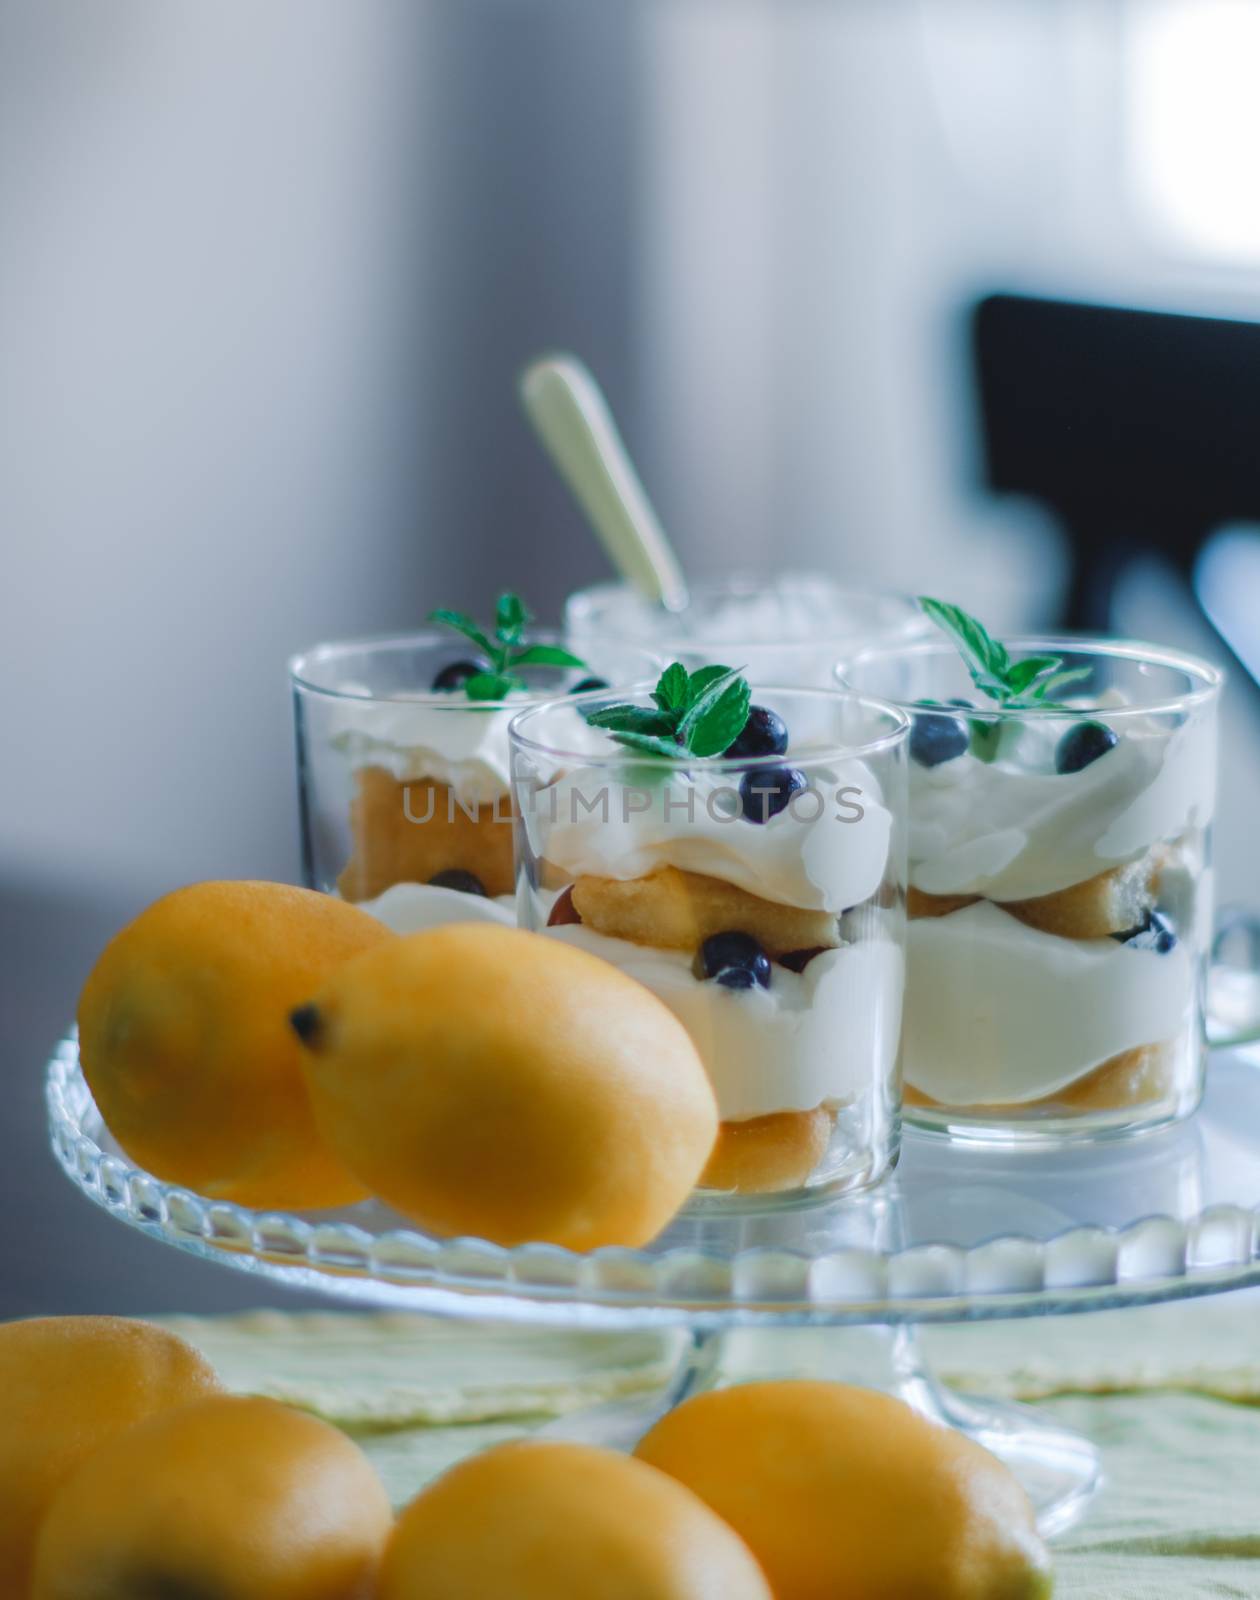 Homemade tiramisu with lemons served on table. by Emurado